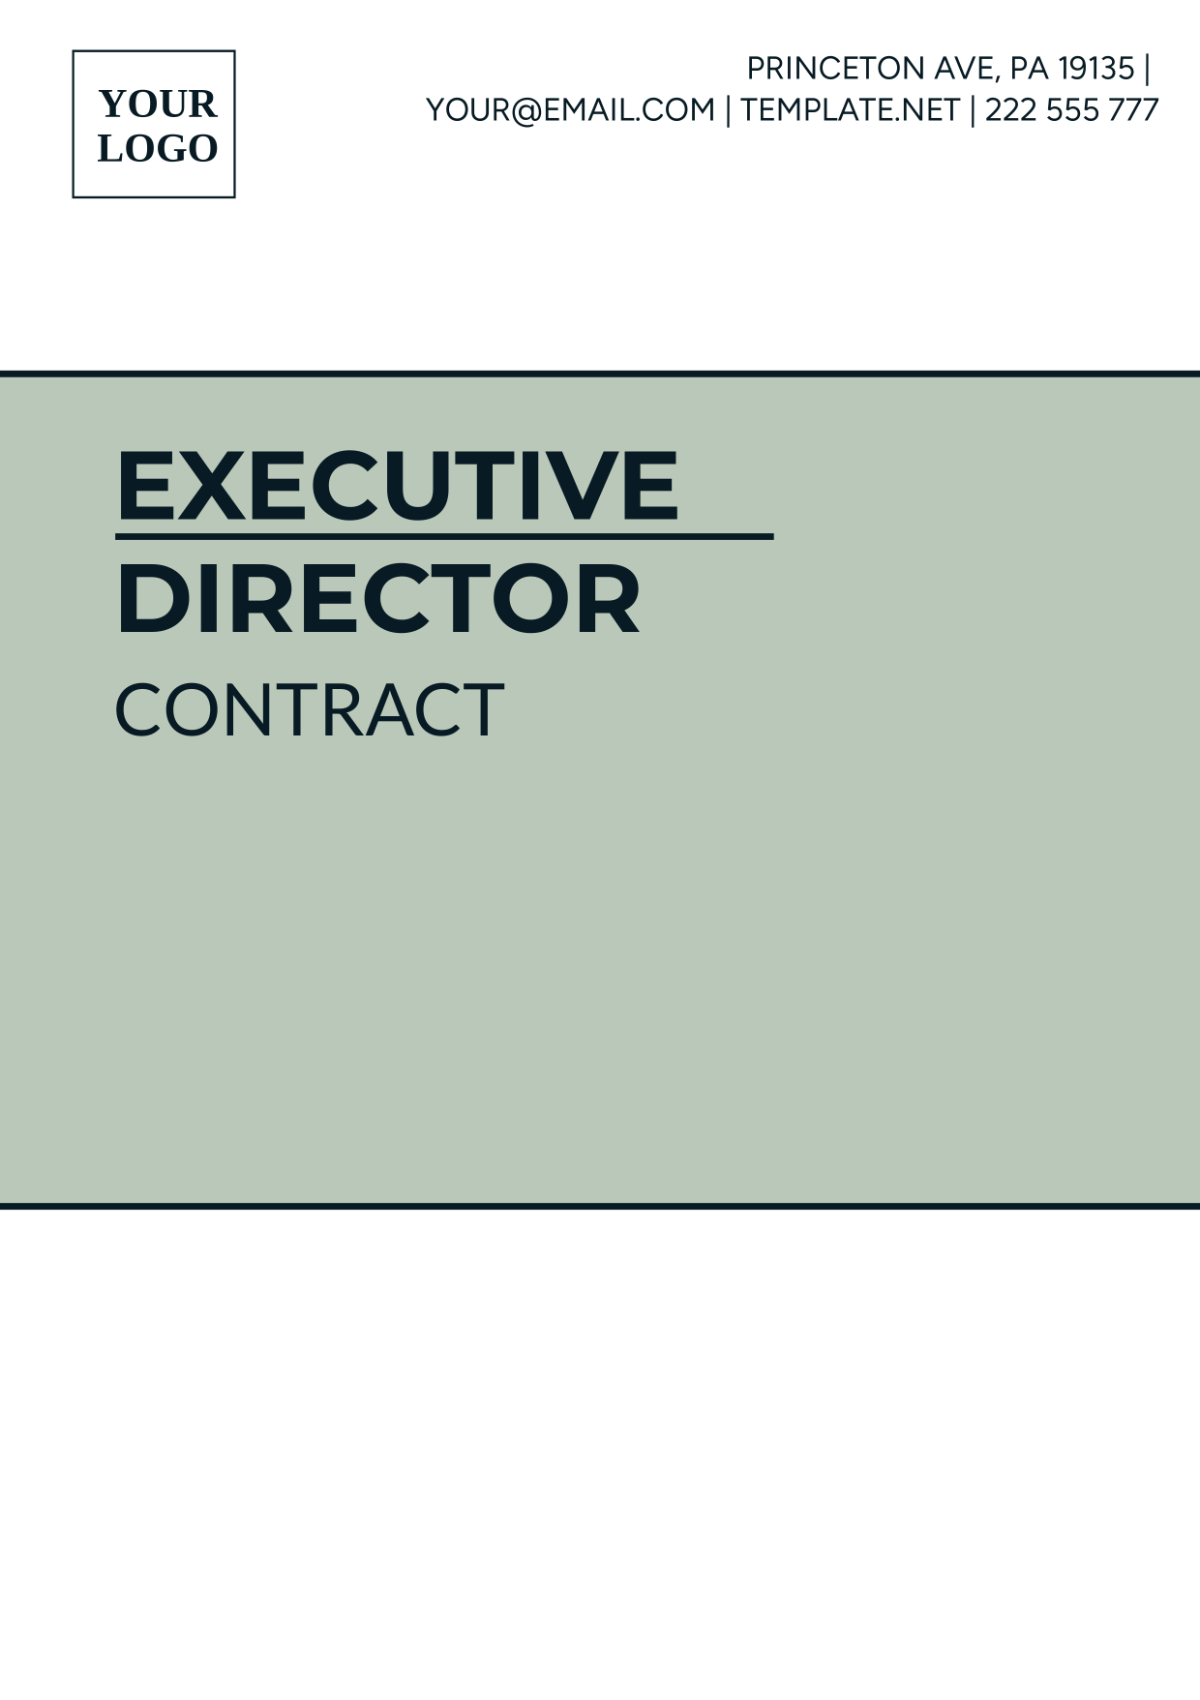 Executive Director Contract Template